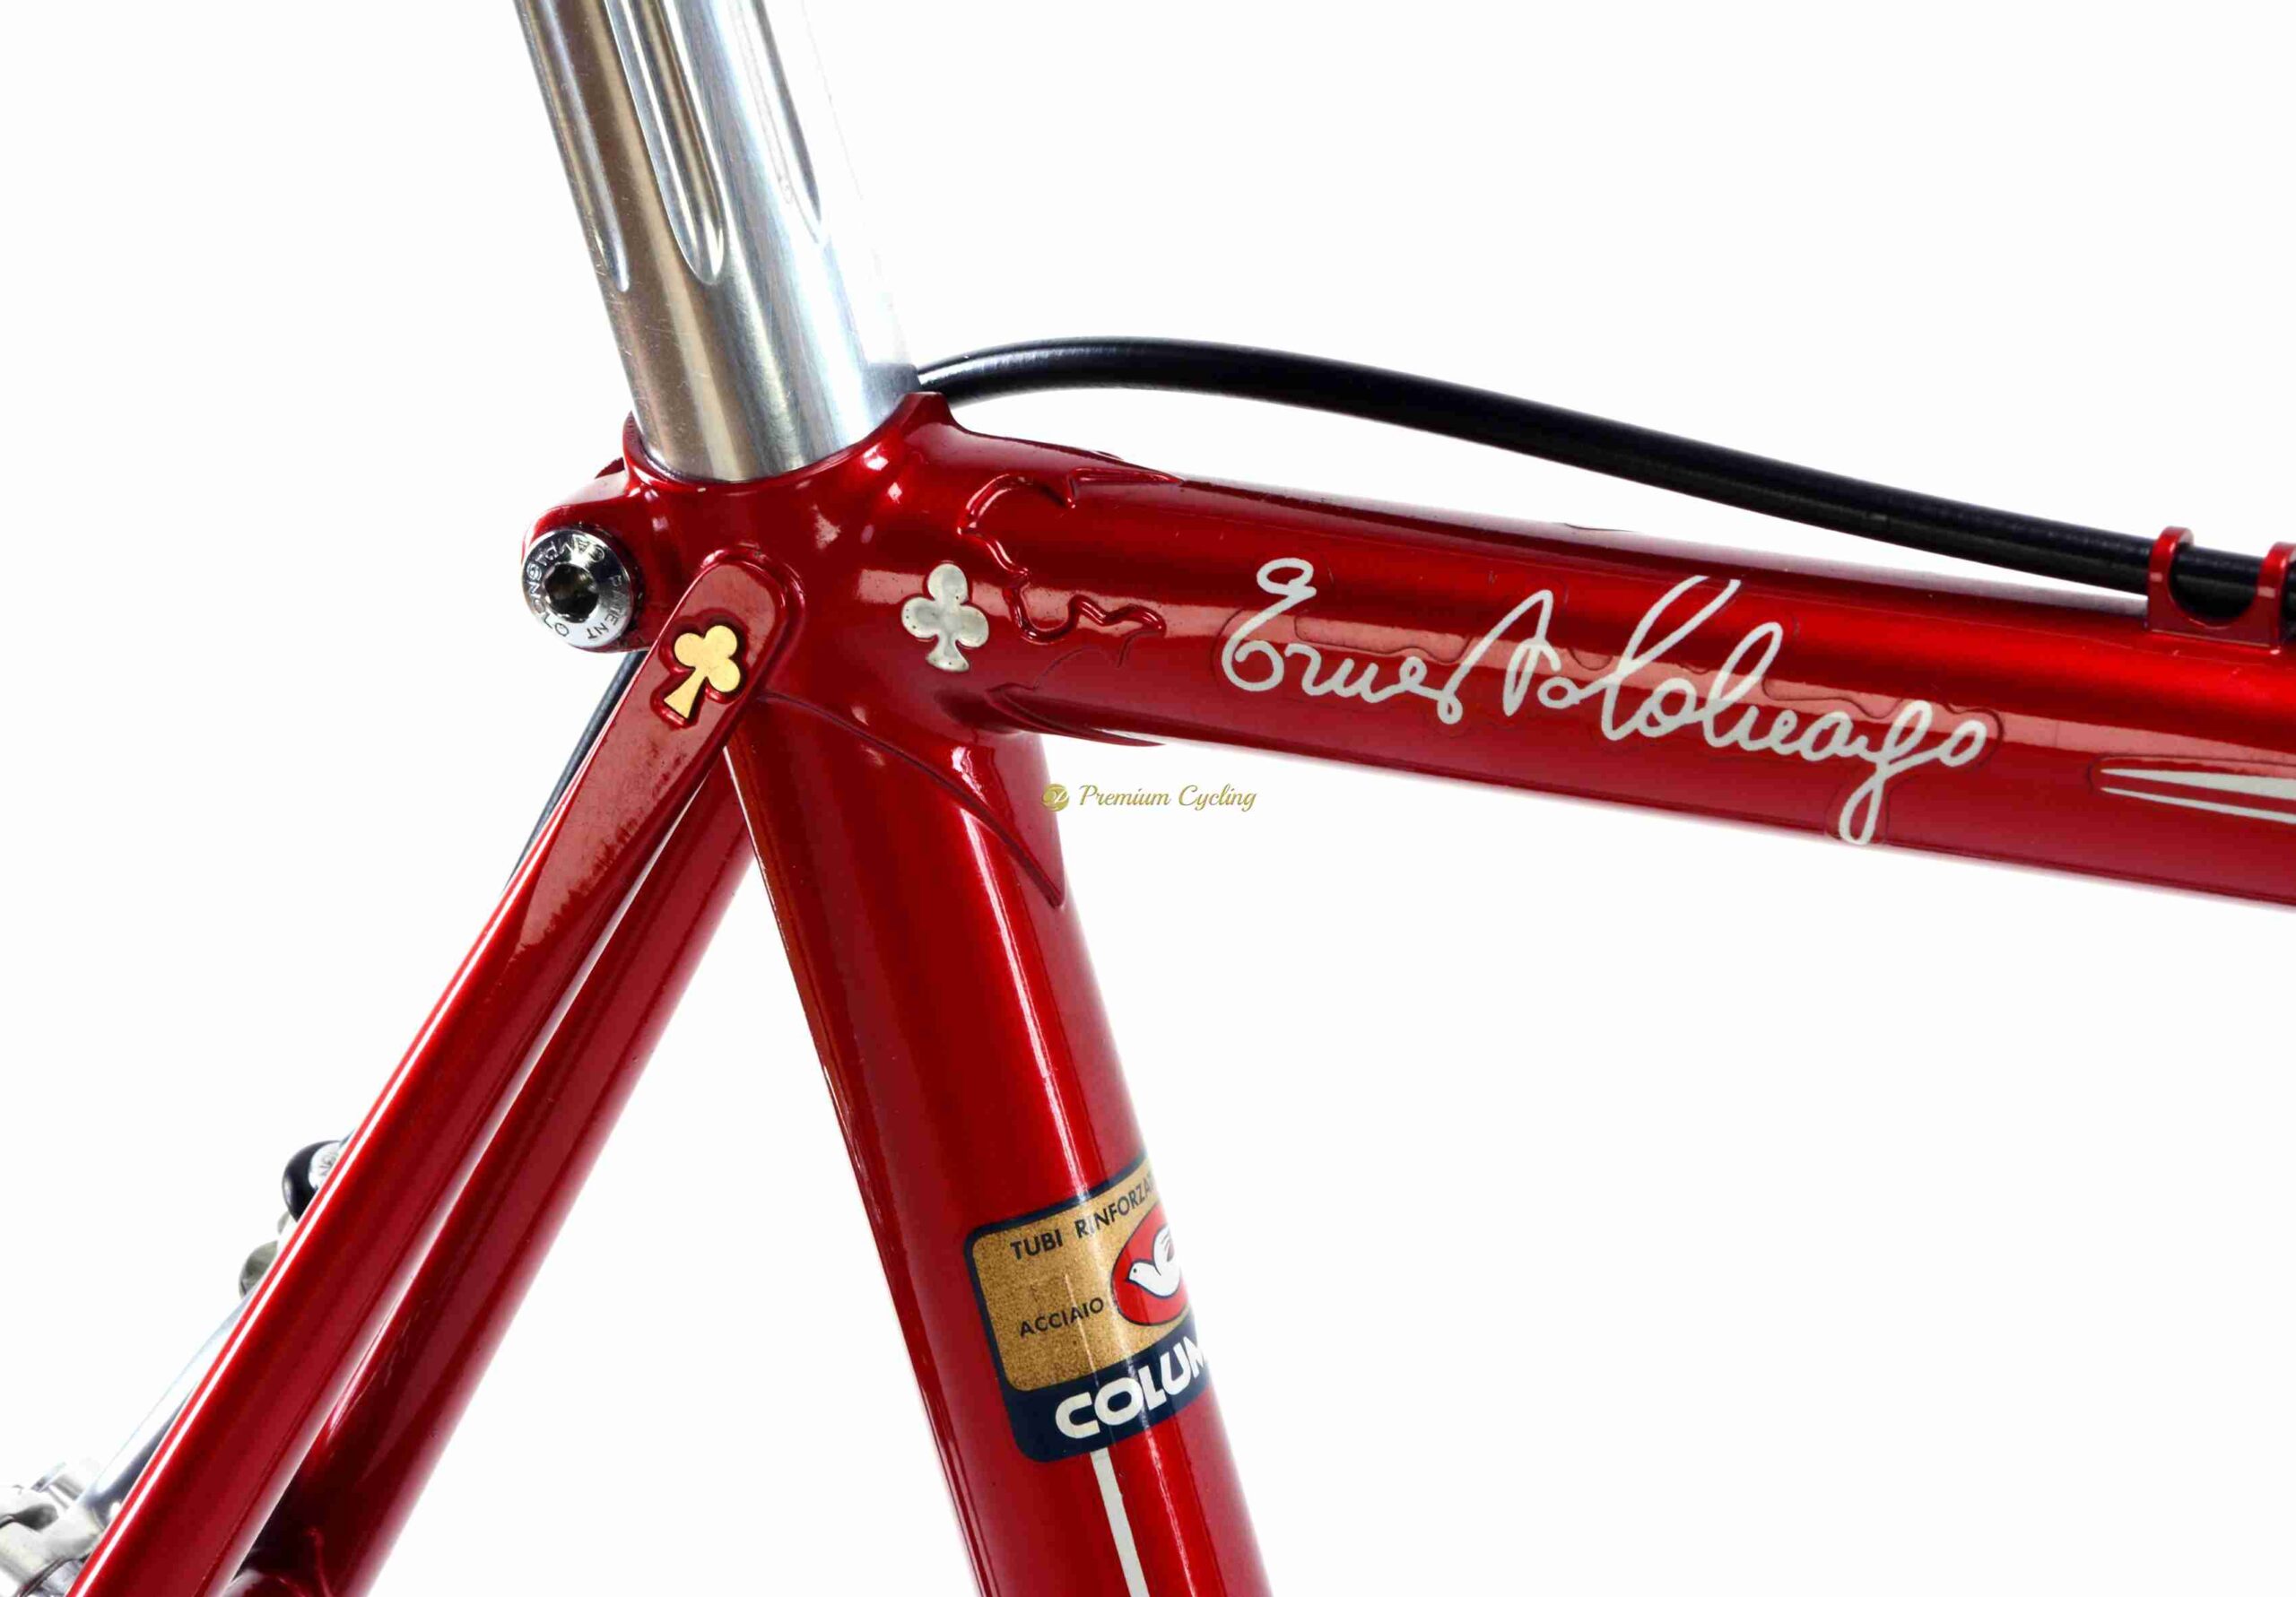 COLNAGO Arabesque, Campagnolo 50th Anniversary, 56cm, new old stock (1984) – Premium Cycling